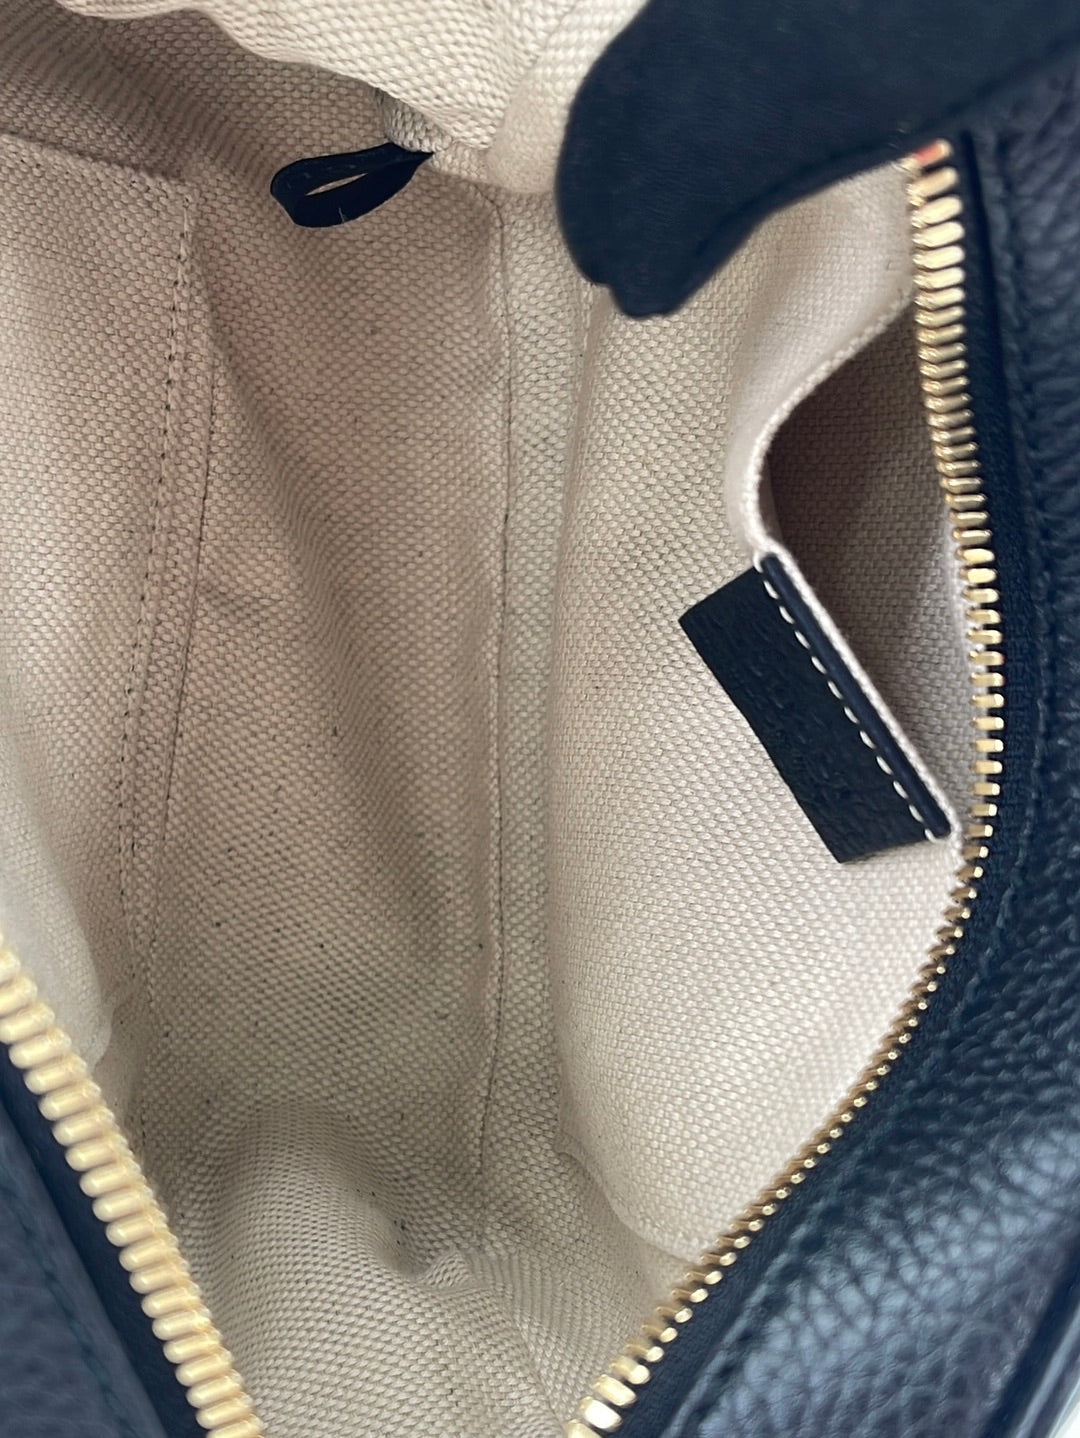 Gucci Small Soho Disco Bag - Black Crossbody Bags, Handbags - GUC1390752